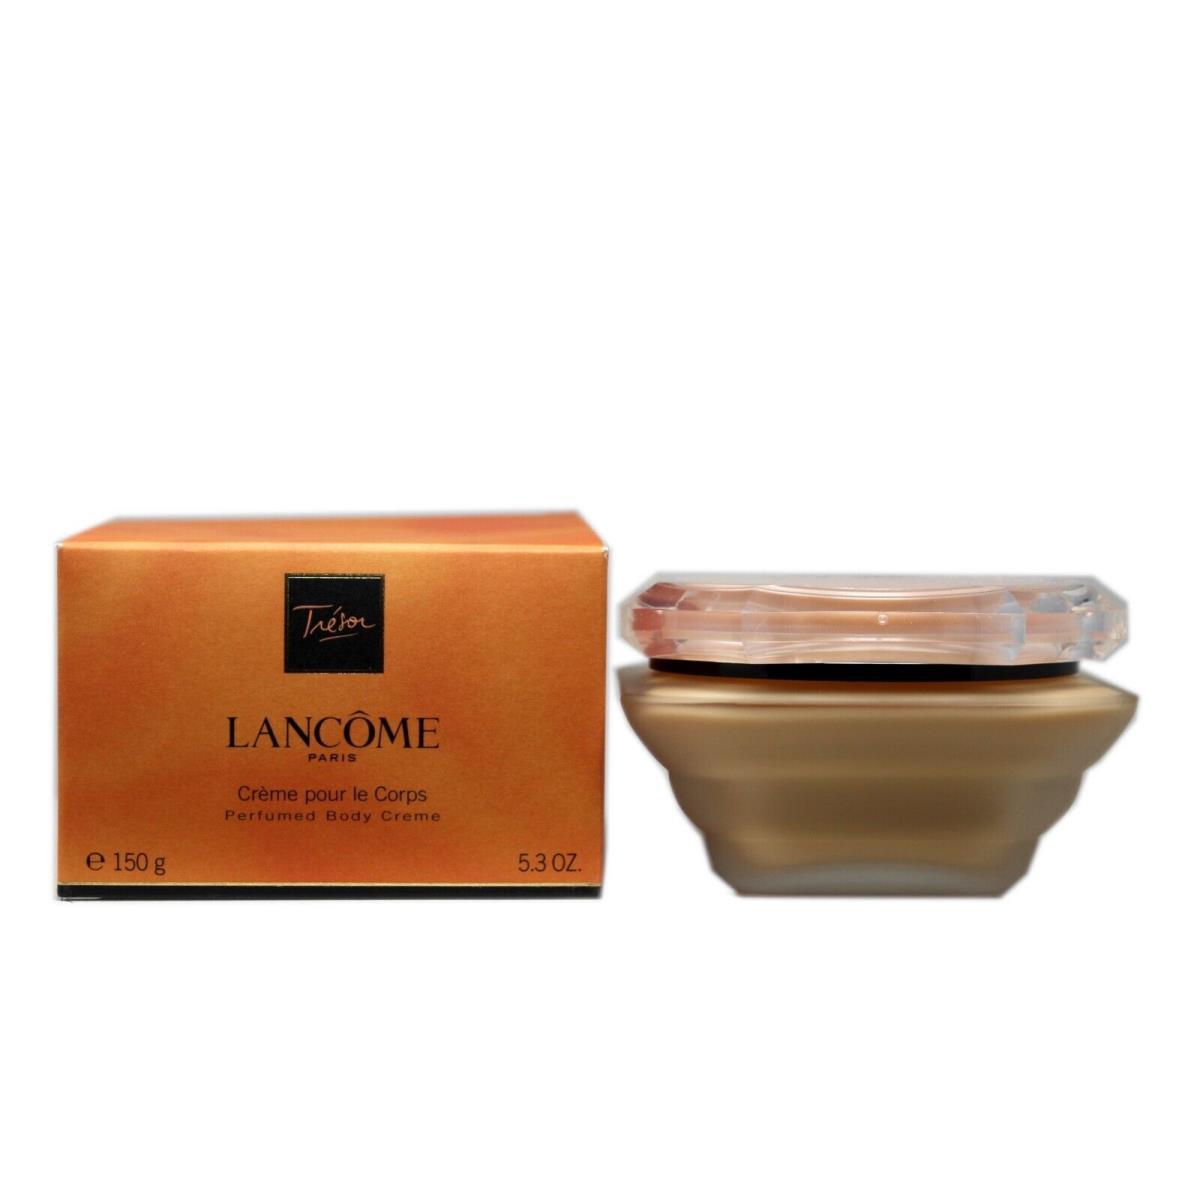 Lancome Tresor Perfumed Body Creme Cream 150 G/5.3 OZ